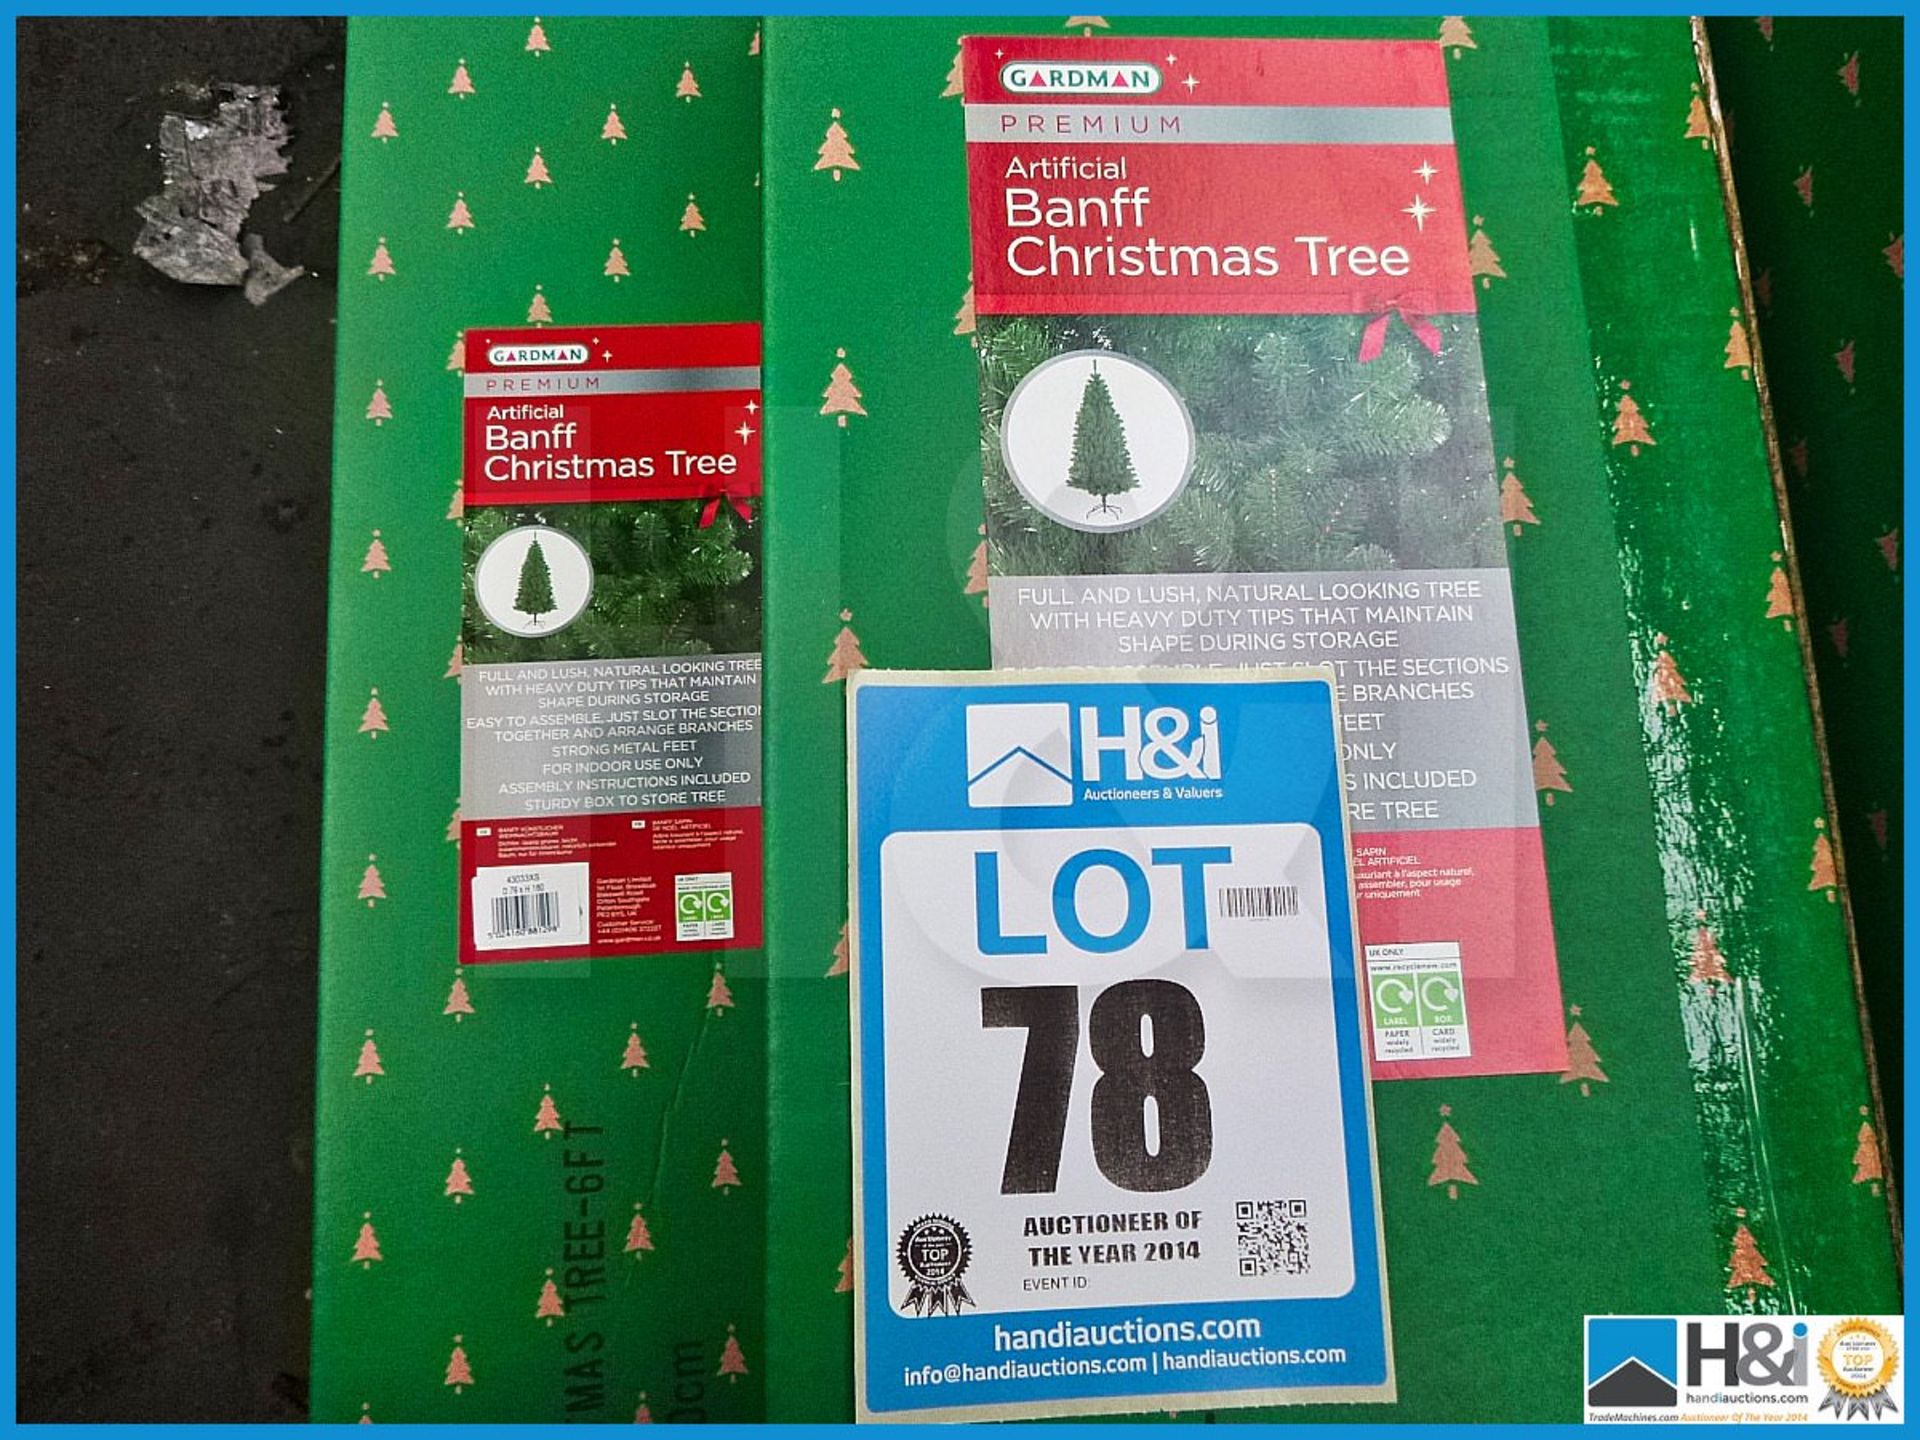 GARDMAN ARTIFICIAL 6' BANFF CHRISTMAS TREE , 43033XS, RRP £69.99, FULL AND LUSH NATURAL LOOKING TREE